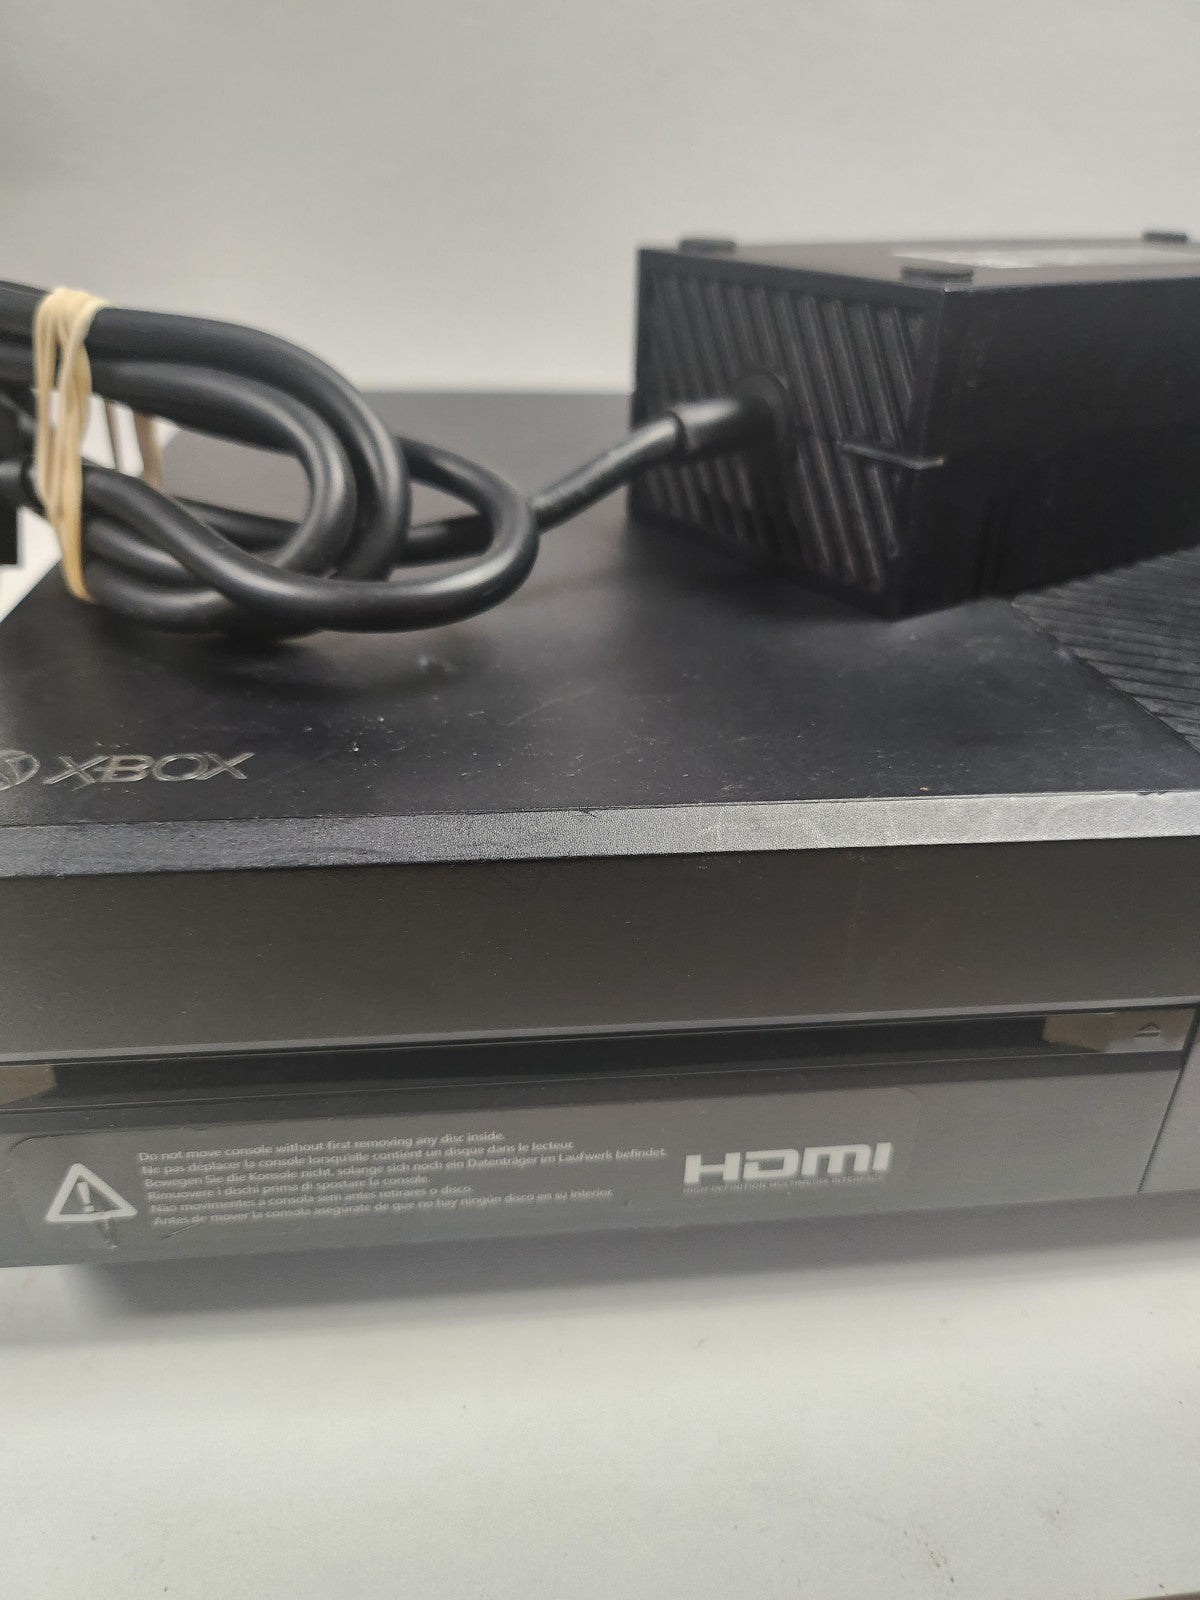 Xbox One Black (Modell 1540) 500 GB mit Adapter.